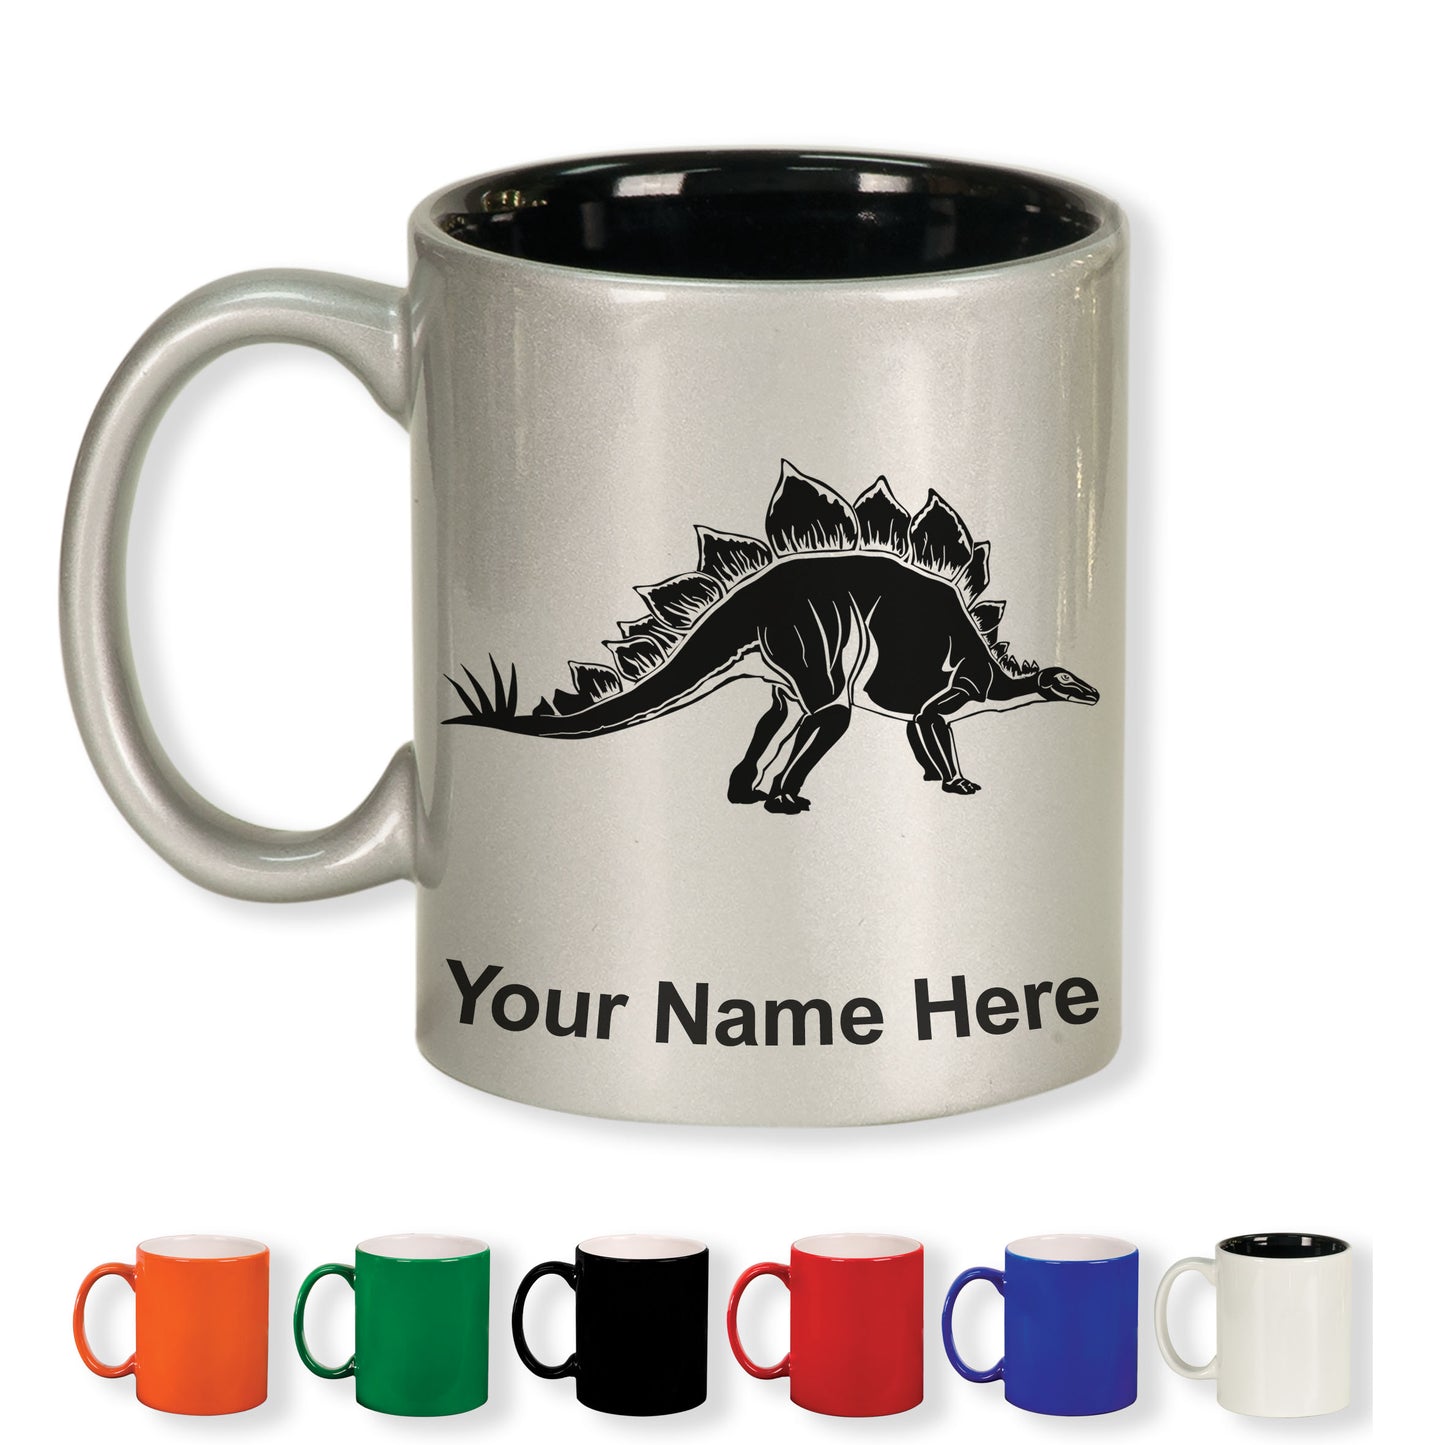 11oz Round Ceramic Coffee Mug, Stegosaurus Dinosaur, Personalized Engraving Included